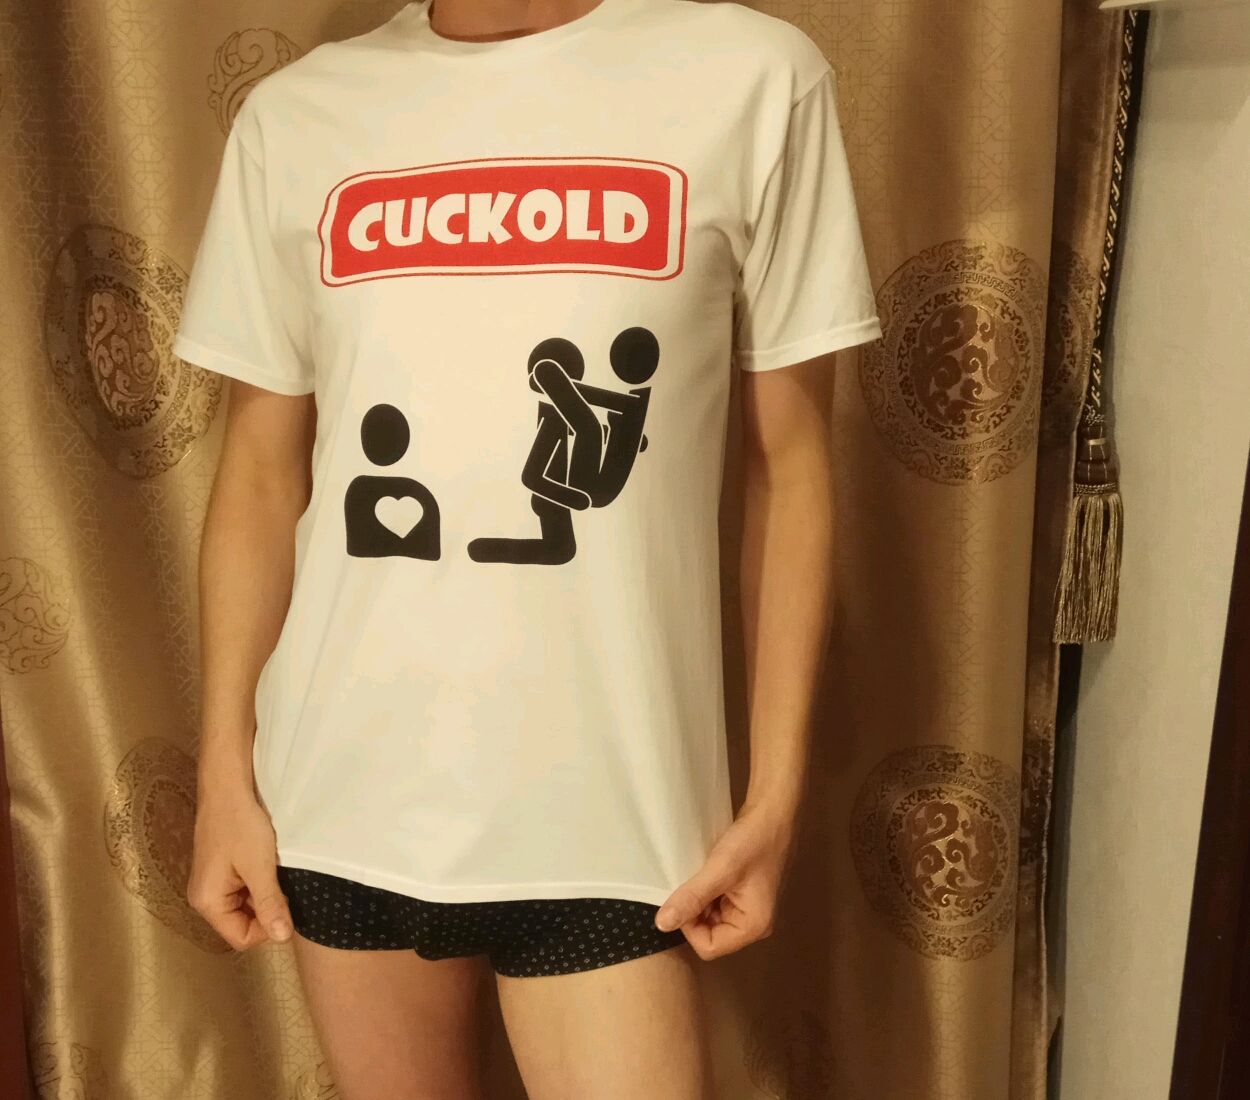 Only Cuckold